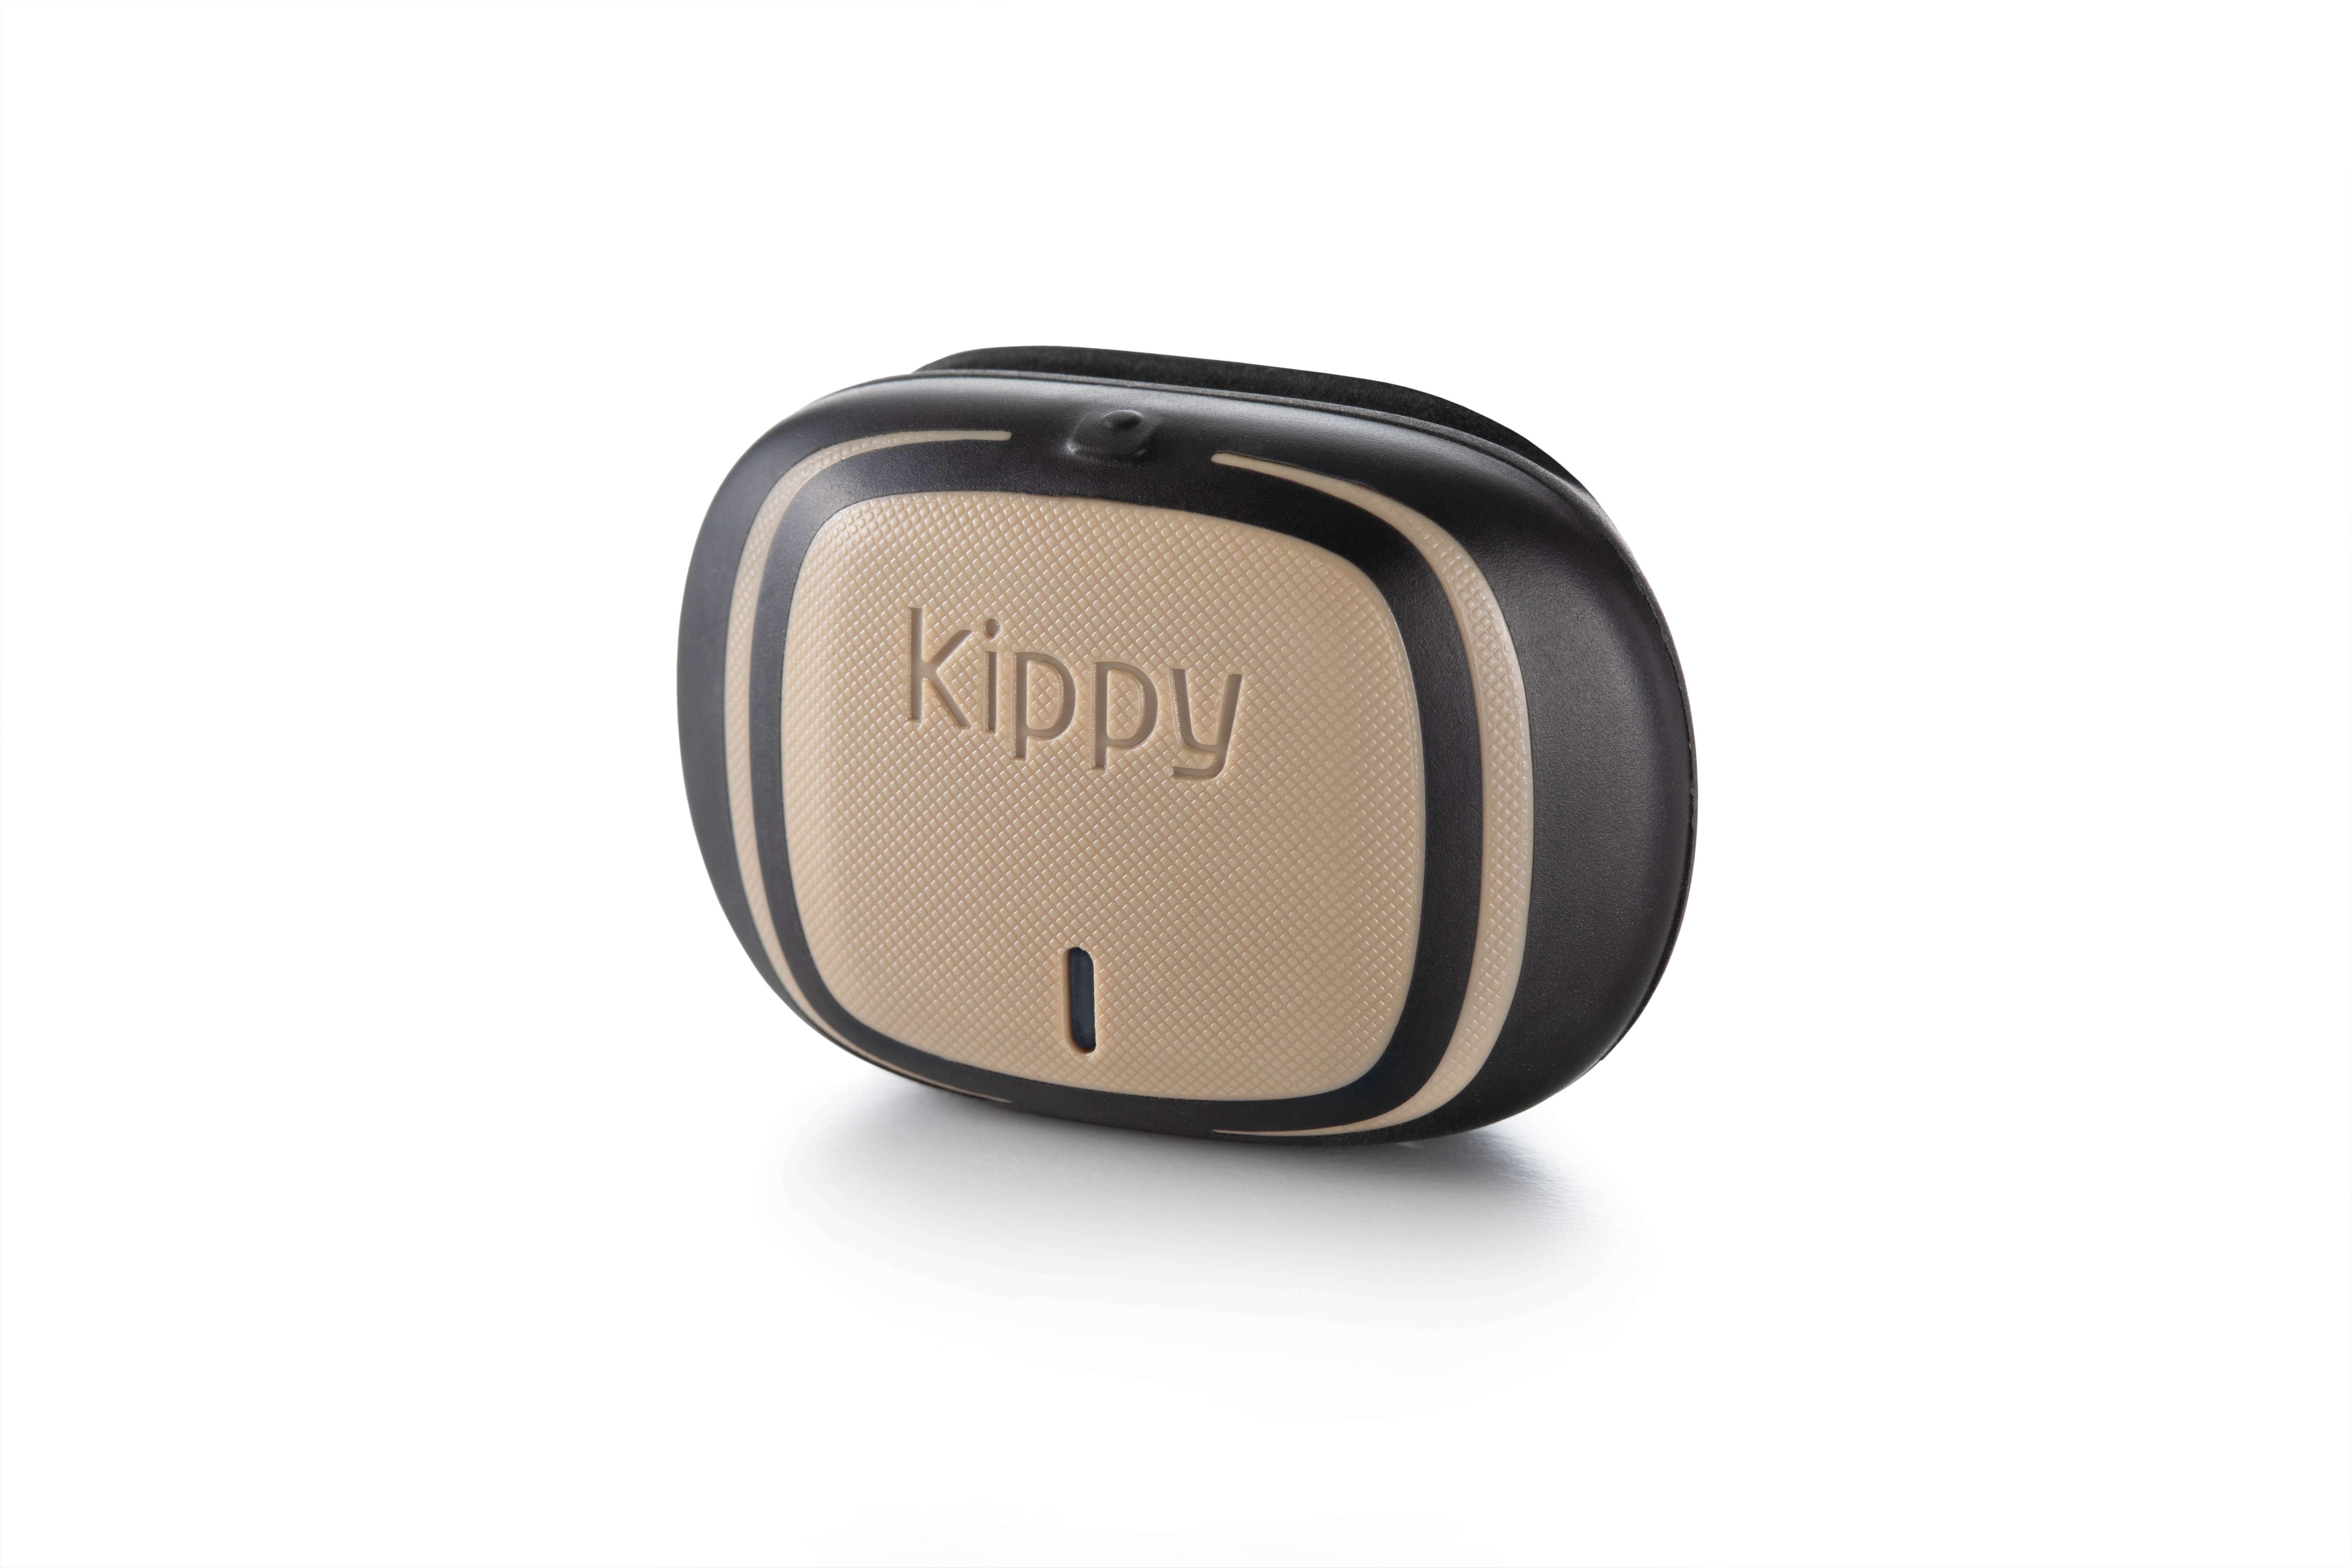 Kippy pet smartphone